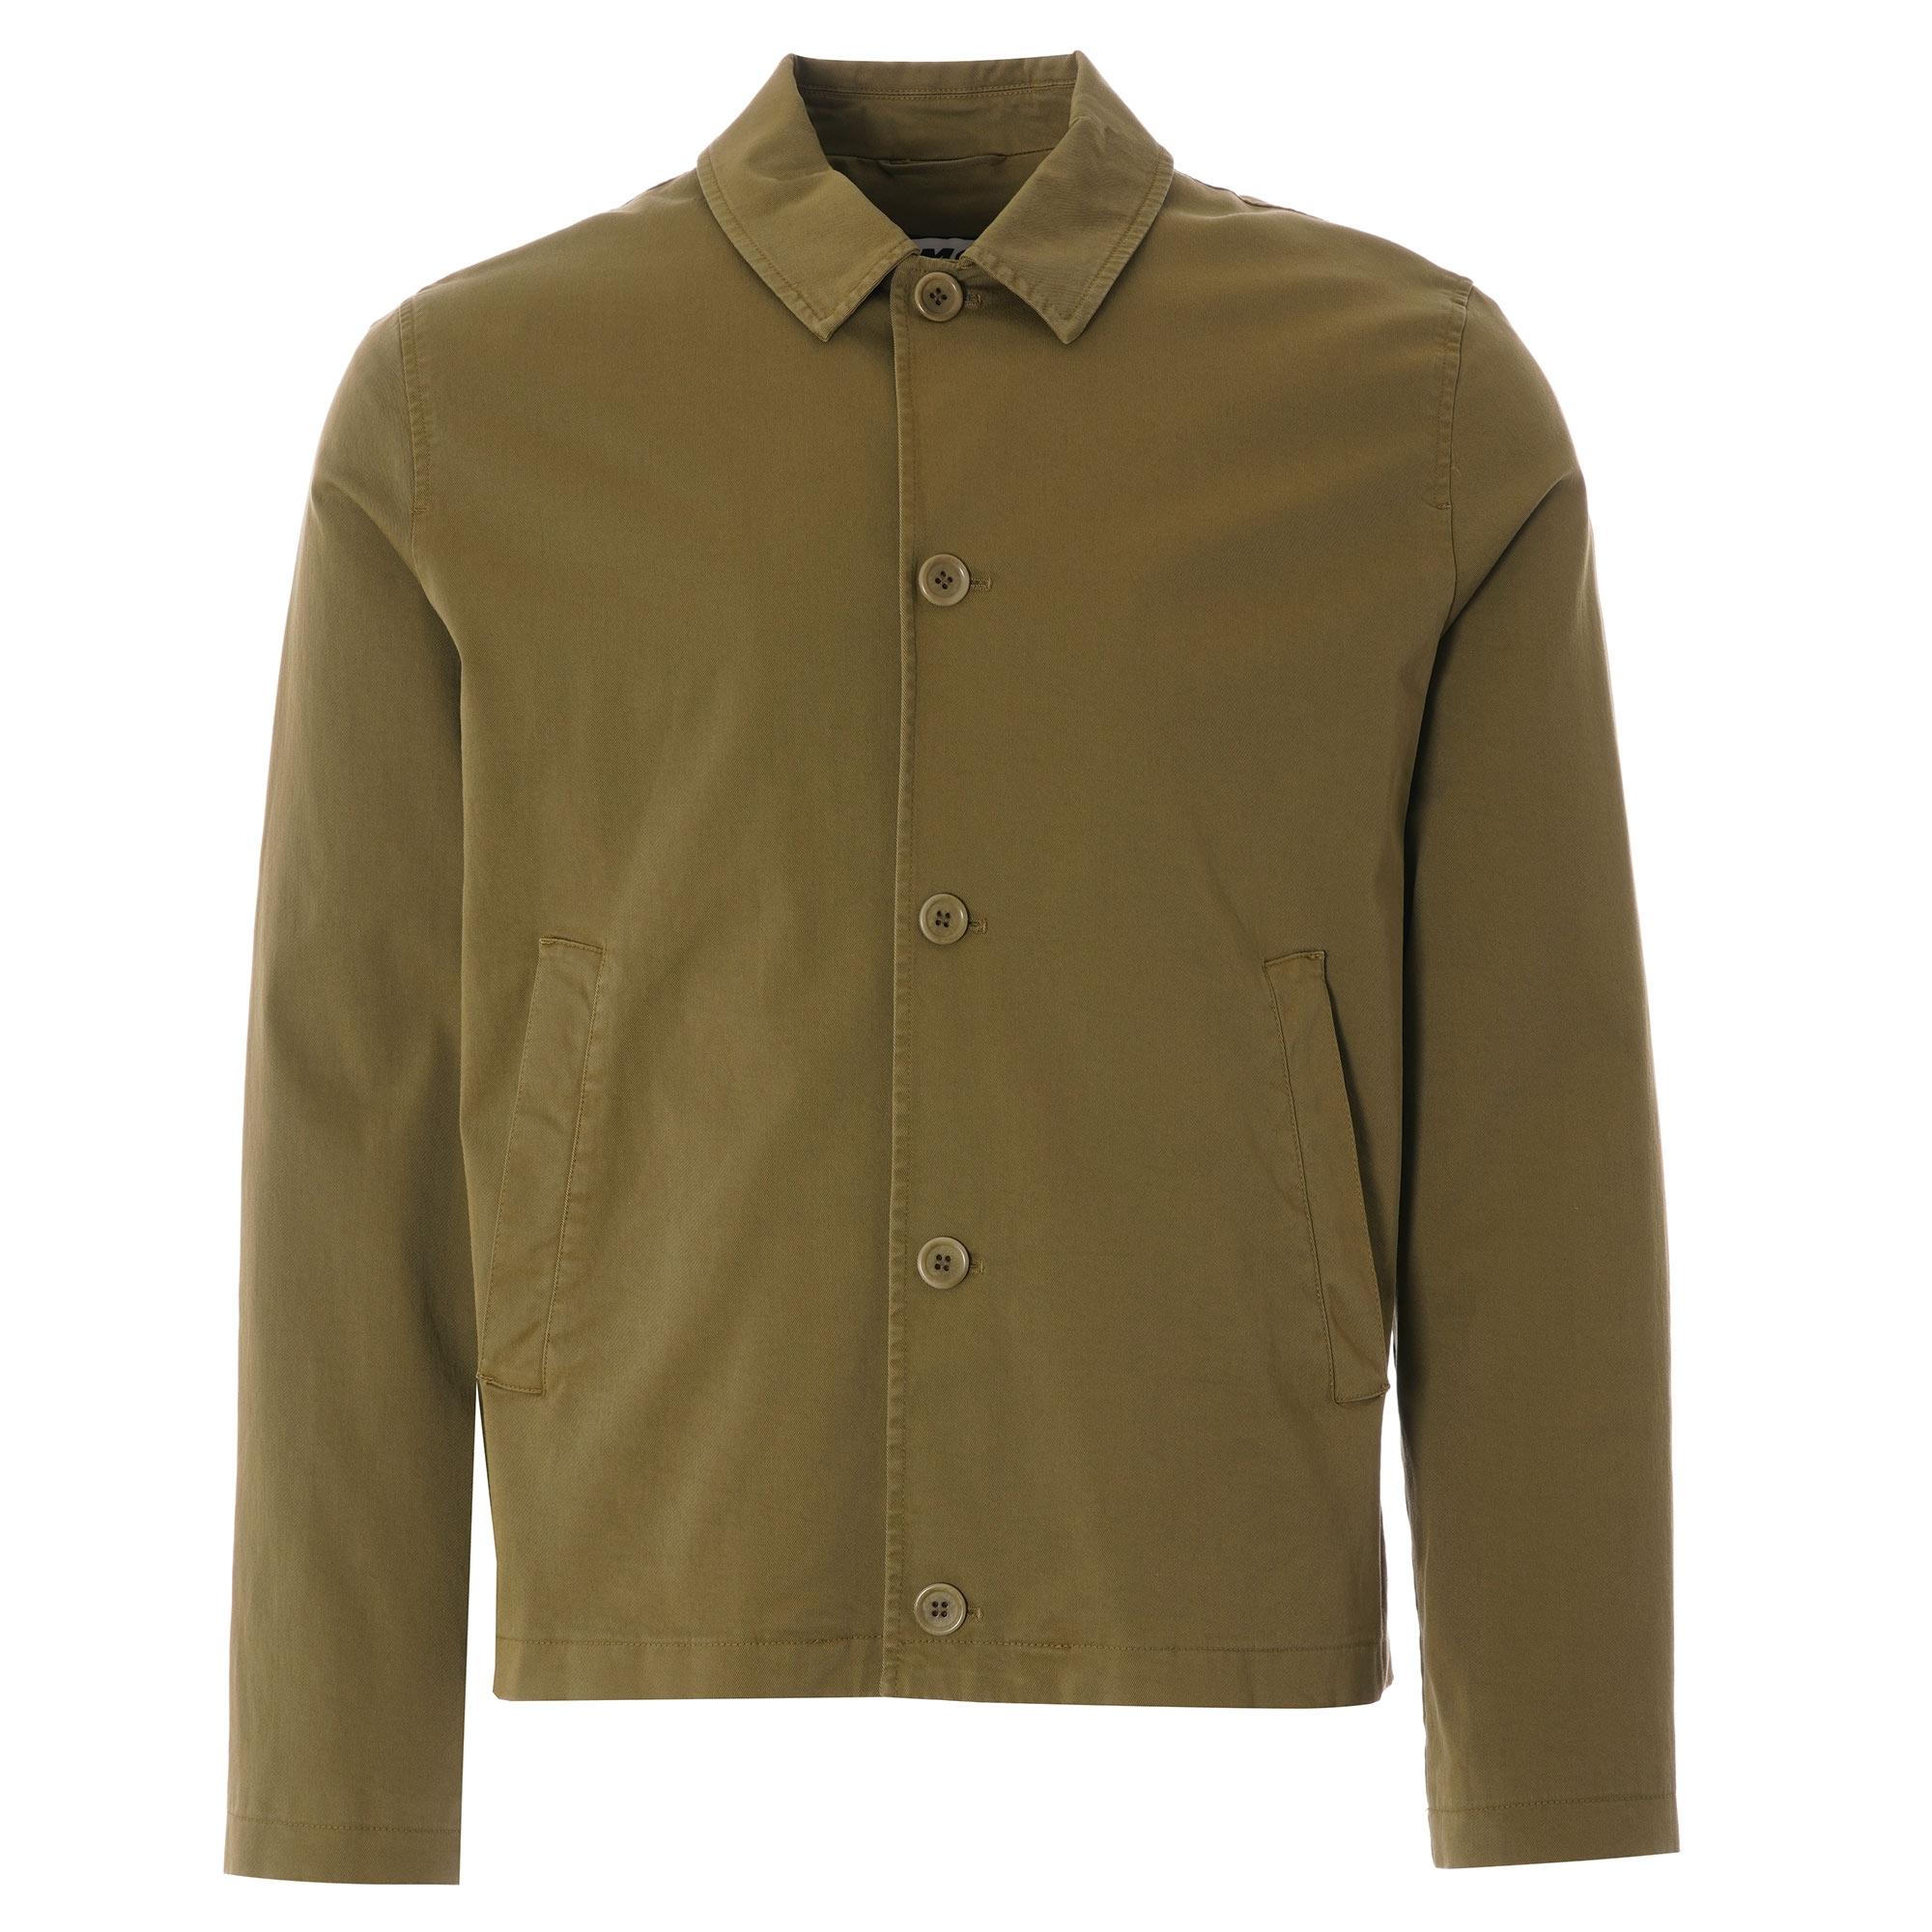 YMC Cotton Groundhog Jacket in Olive (Green) for Men - Lyst